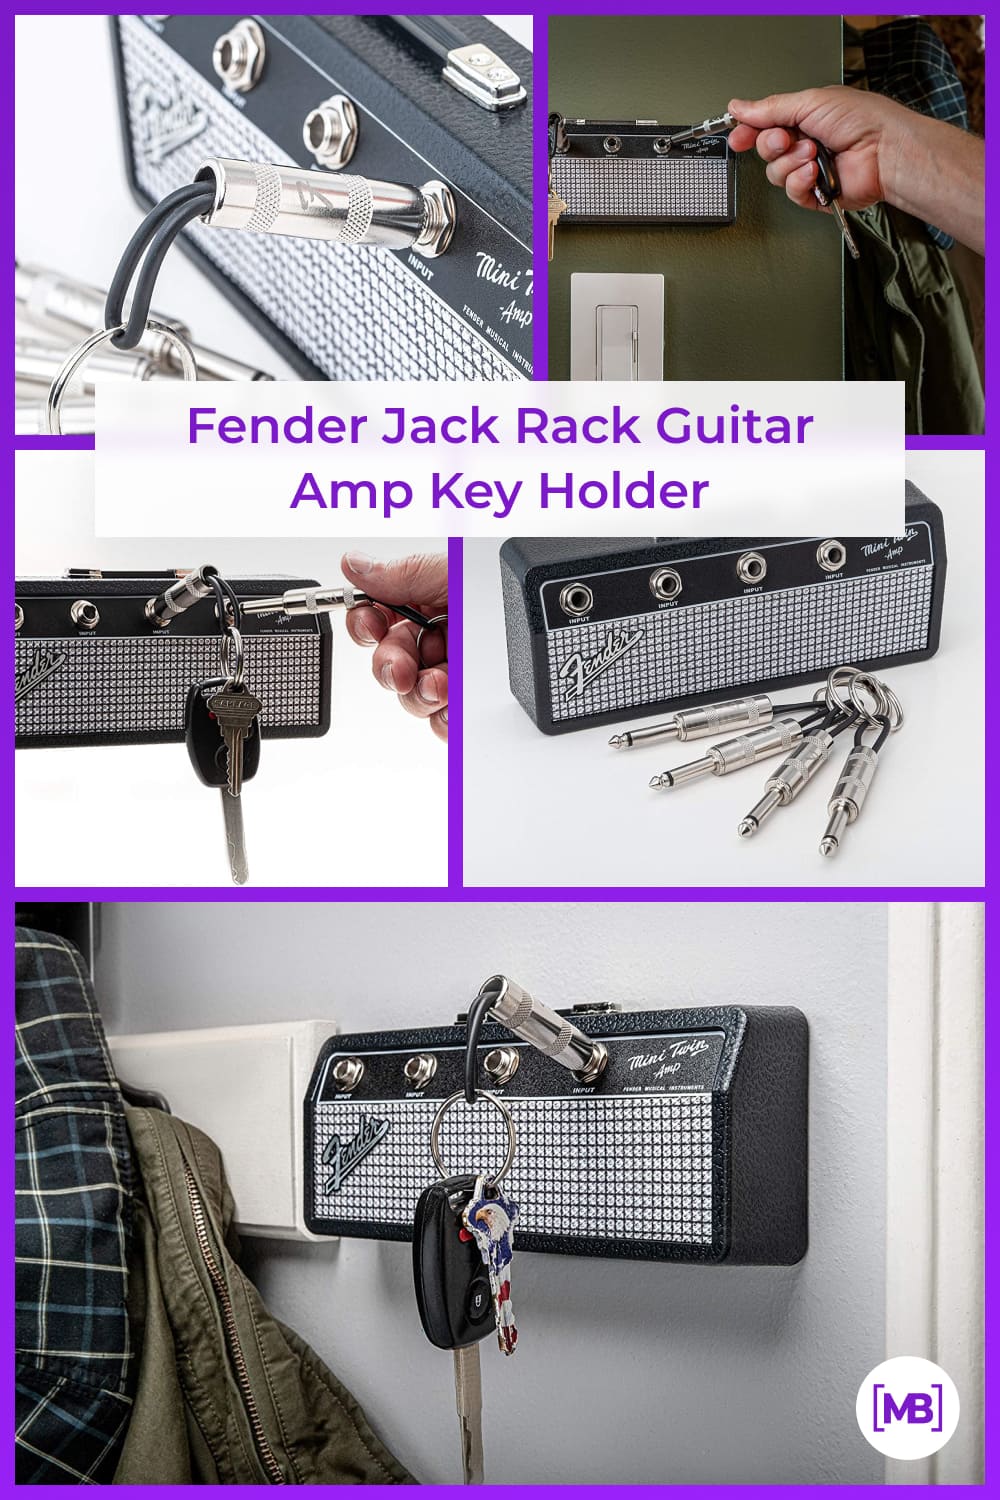 Fender Jack Rack Guitar Amp Key Holder.